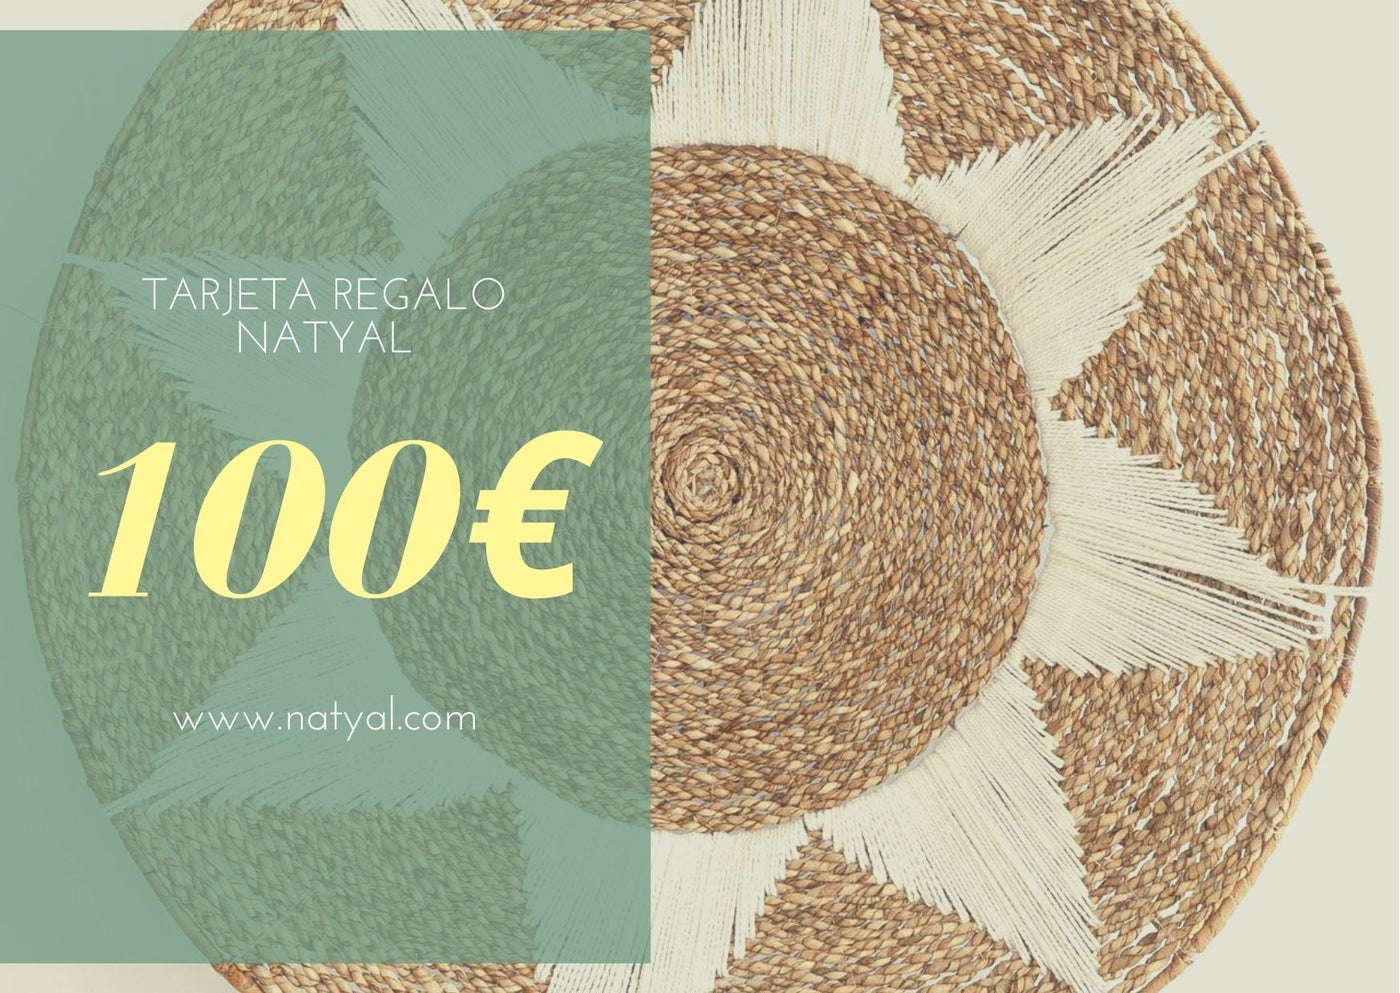 NATYAL tarjeta regalo 100€